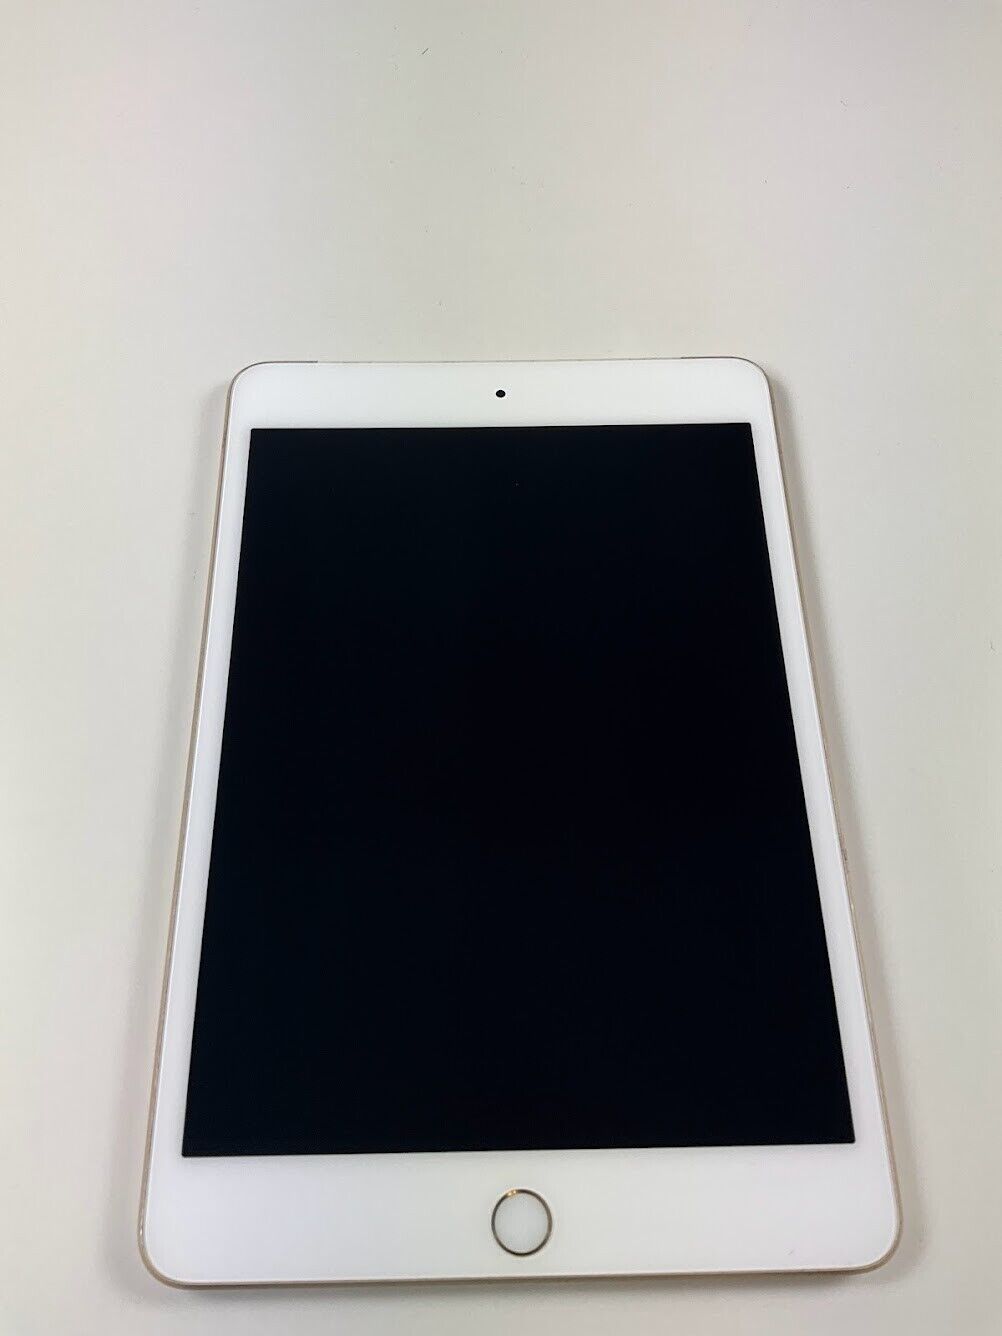 (Defective) Apple iPad mini 4 128GB,Wi-Fi(Unlocked), 7.9in-Gold